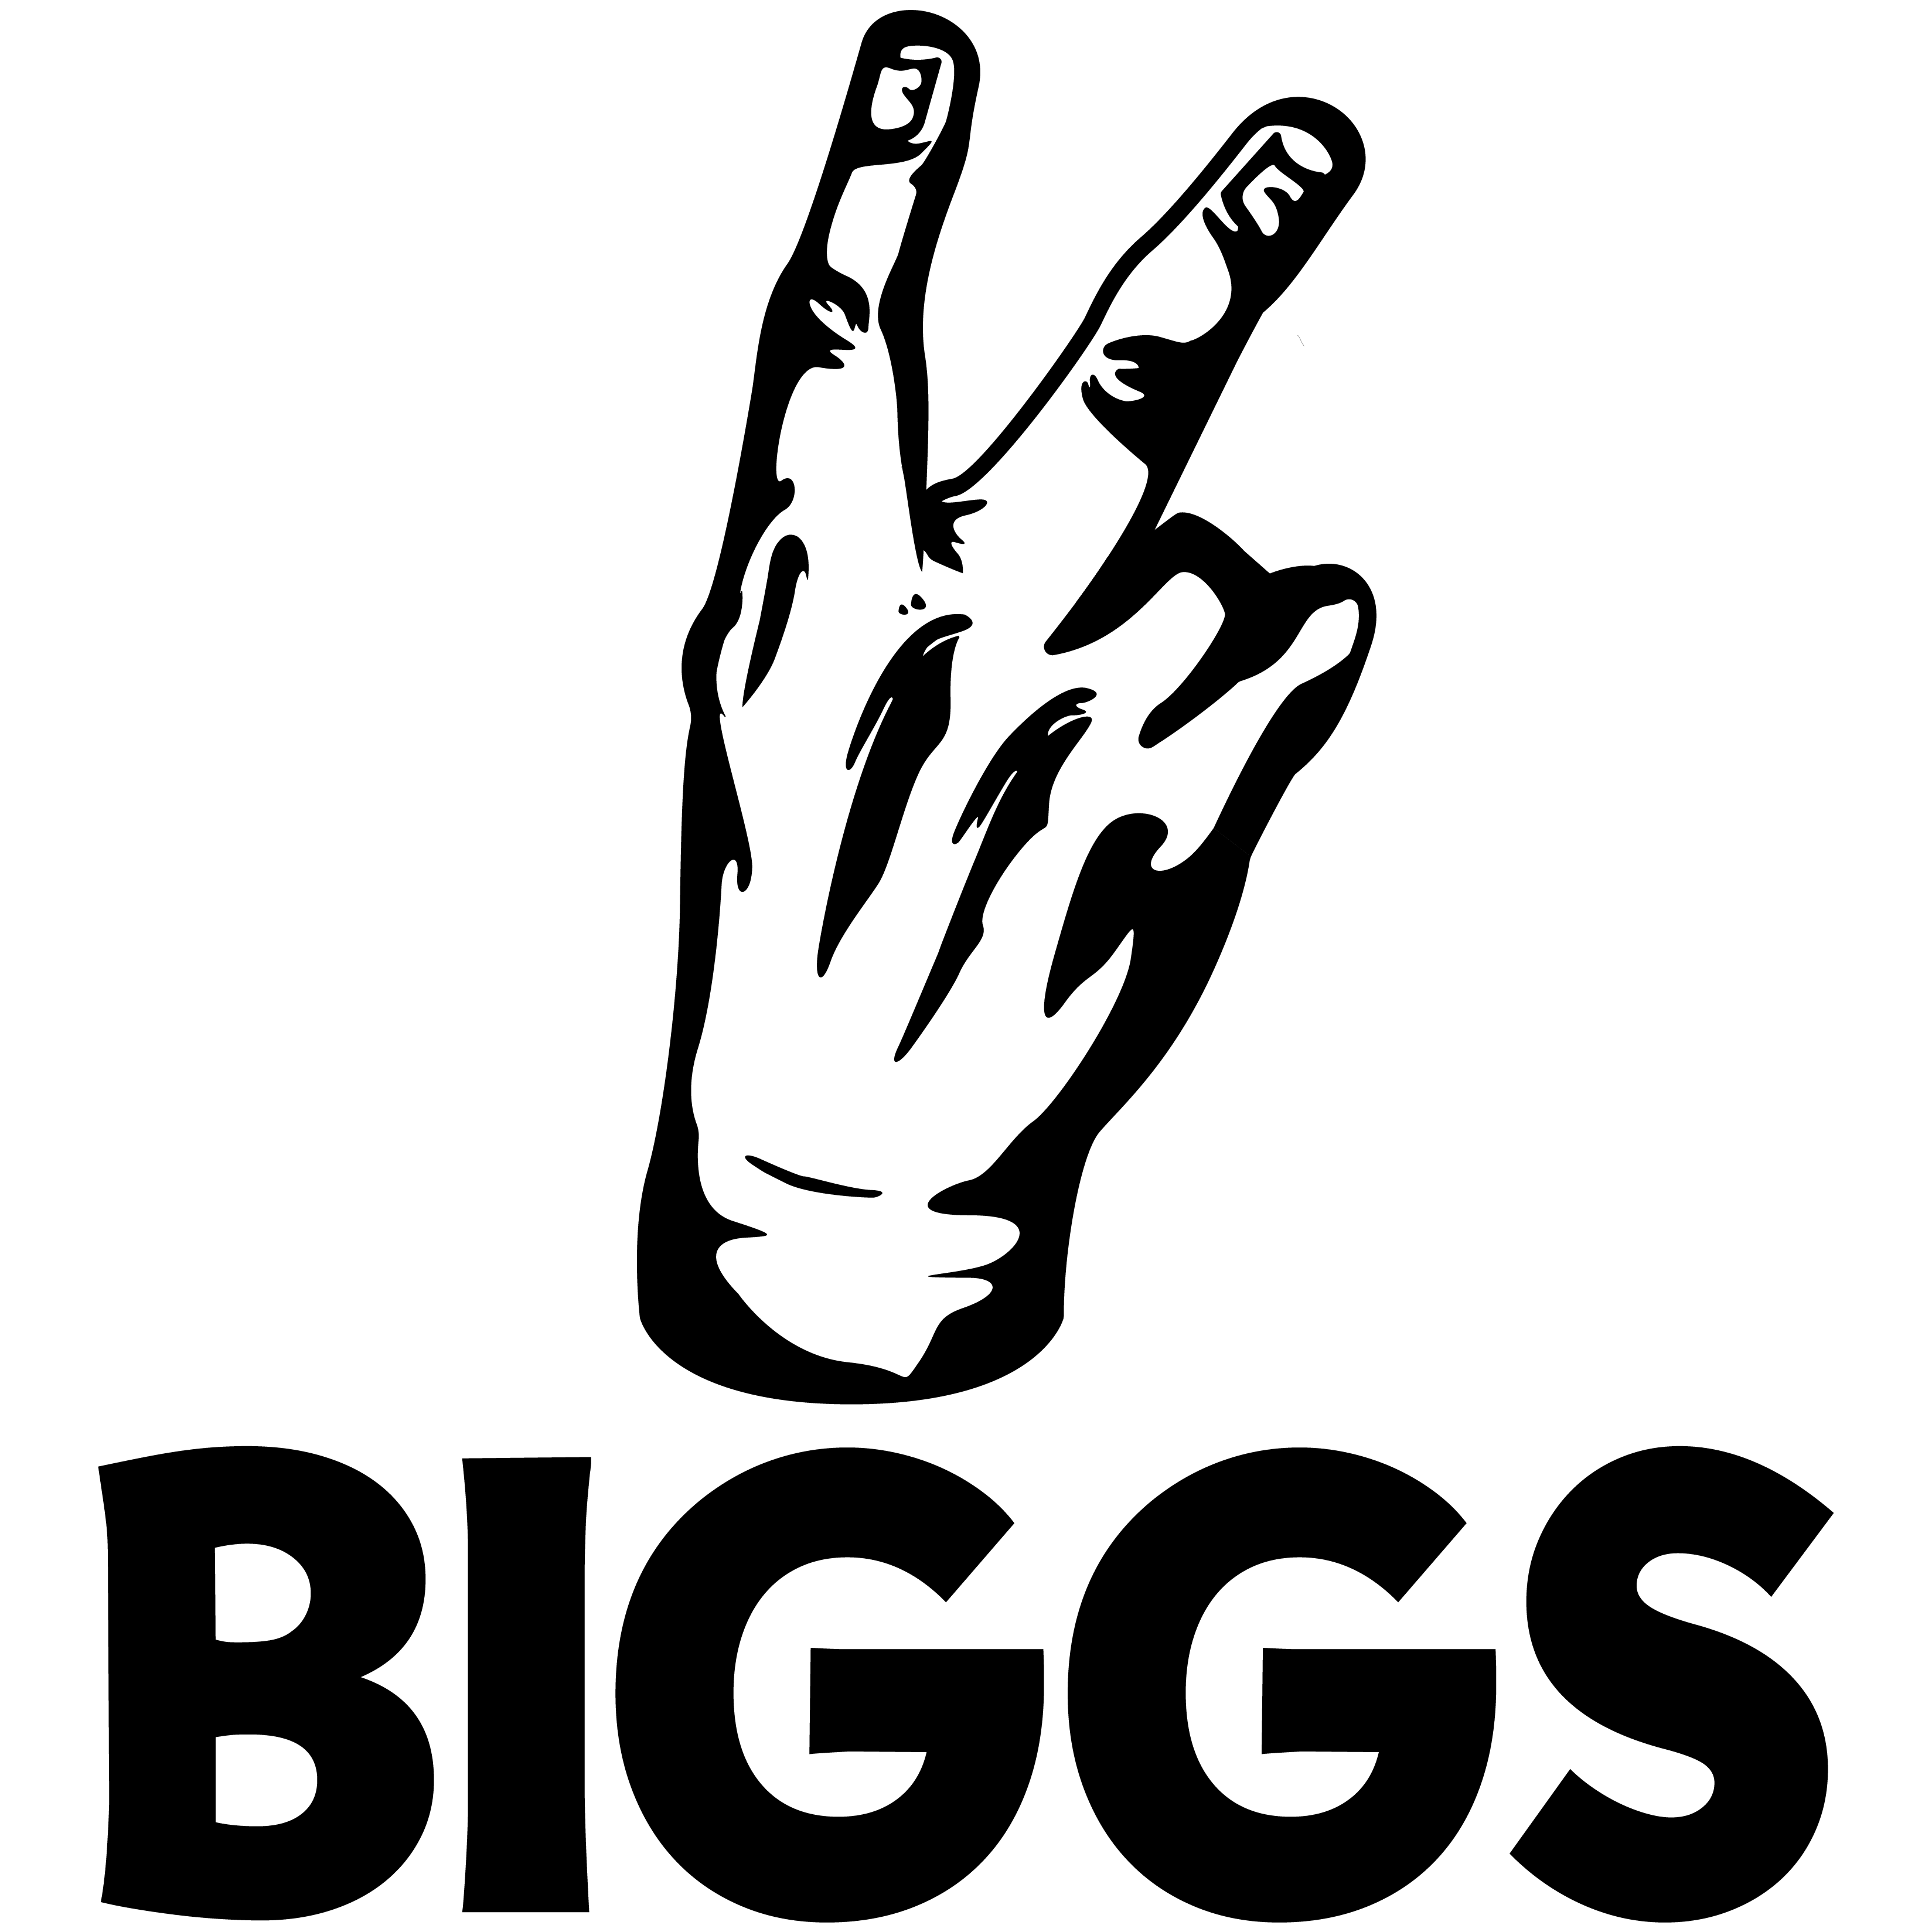 biggs coffee app logo